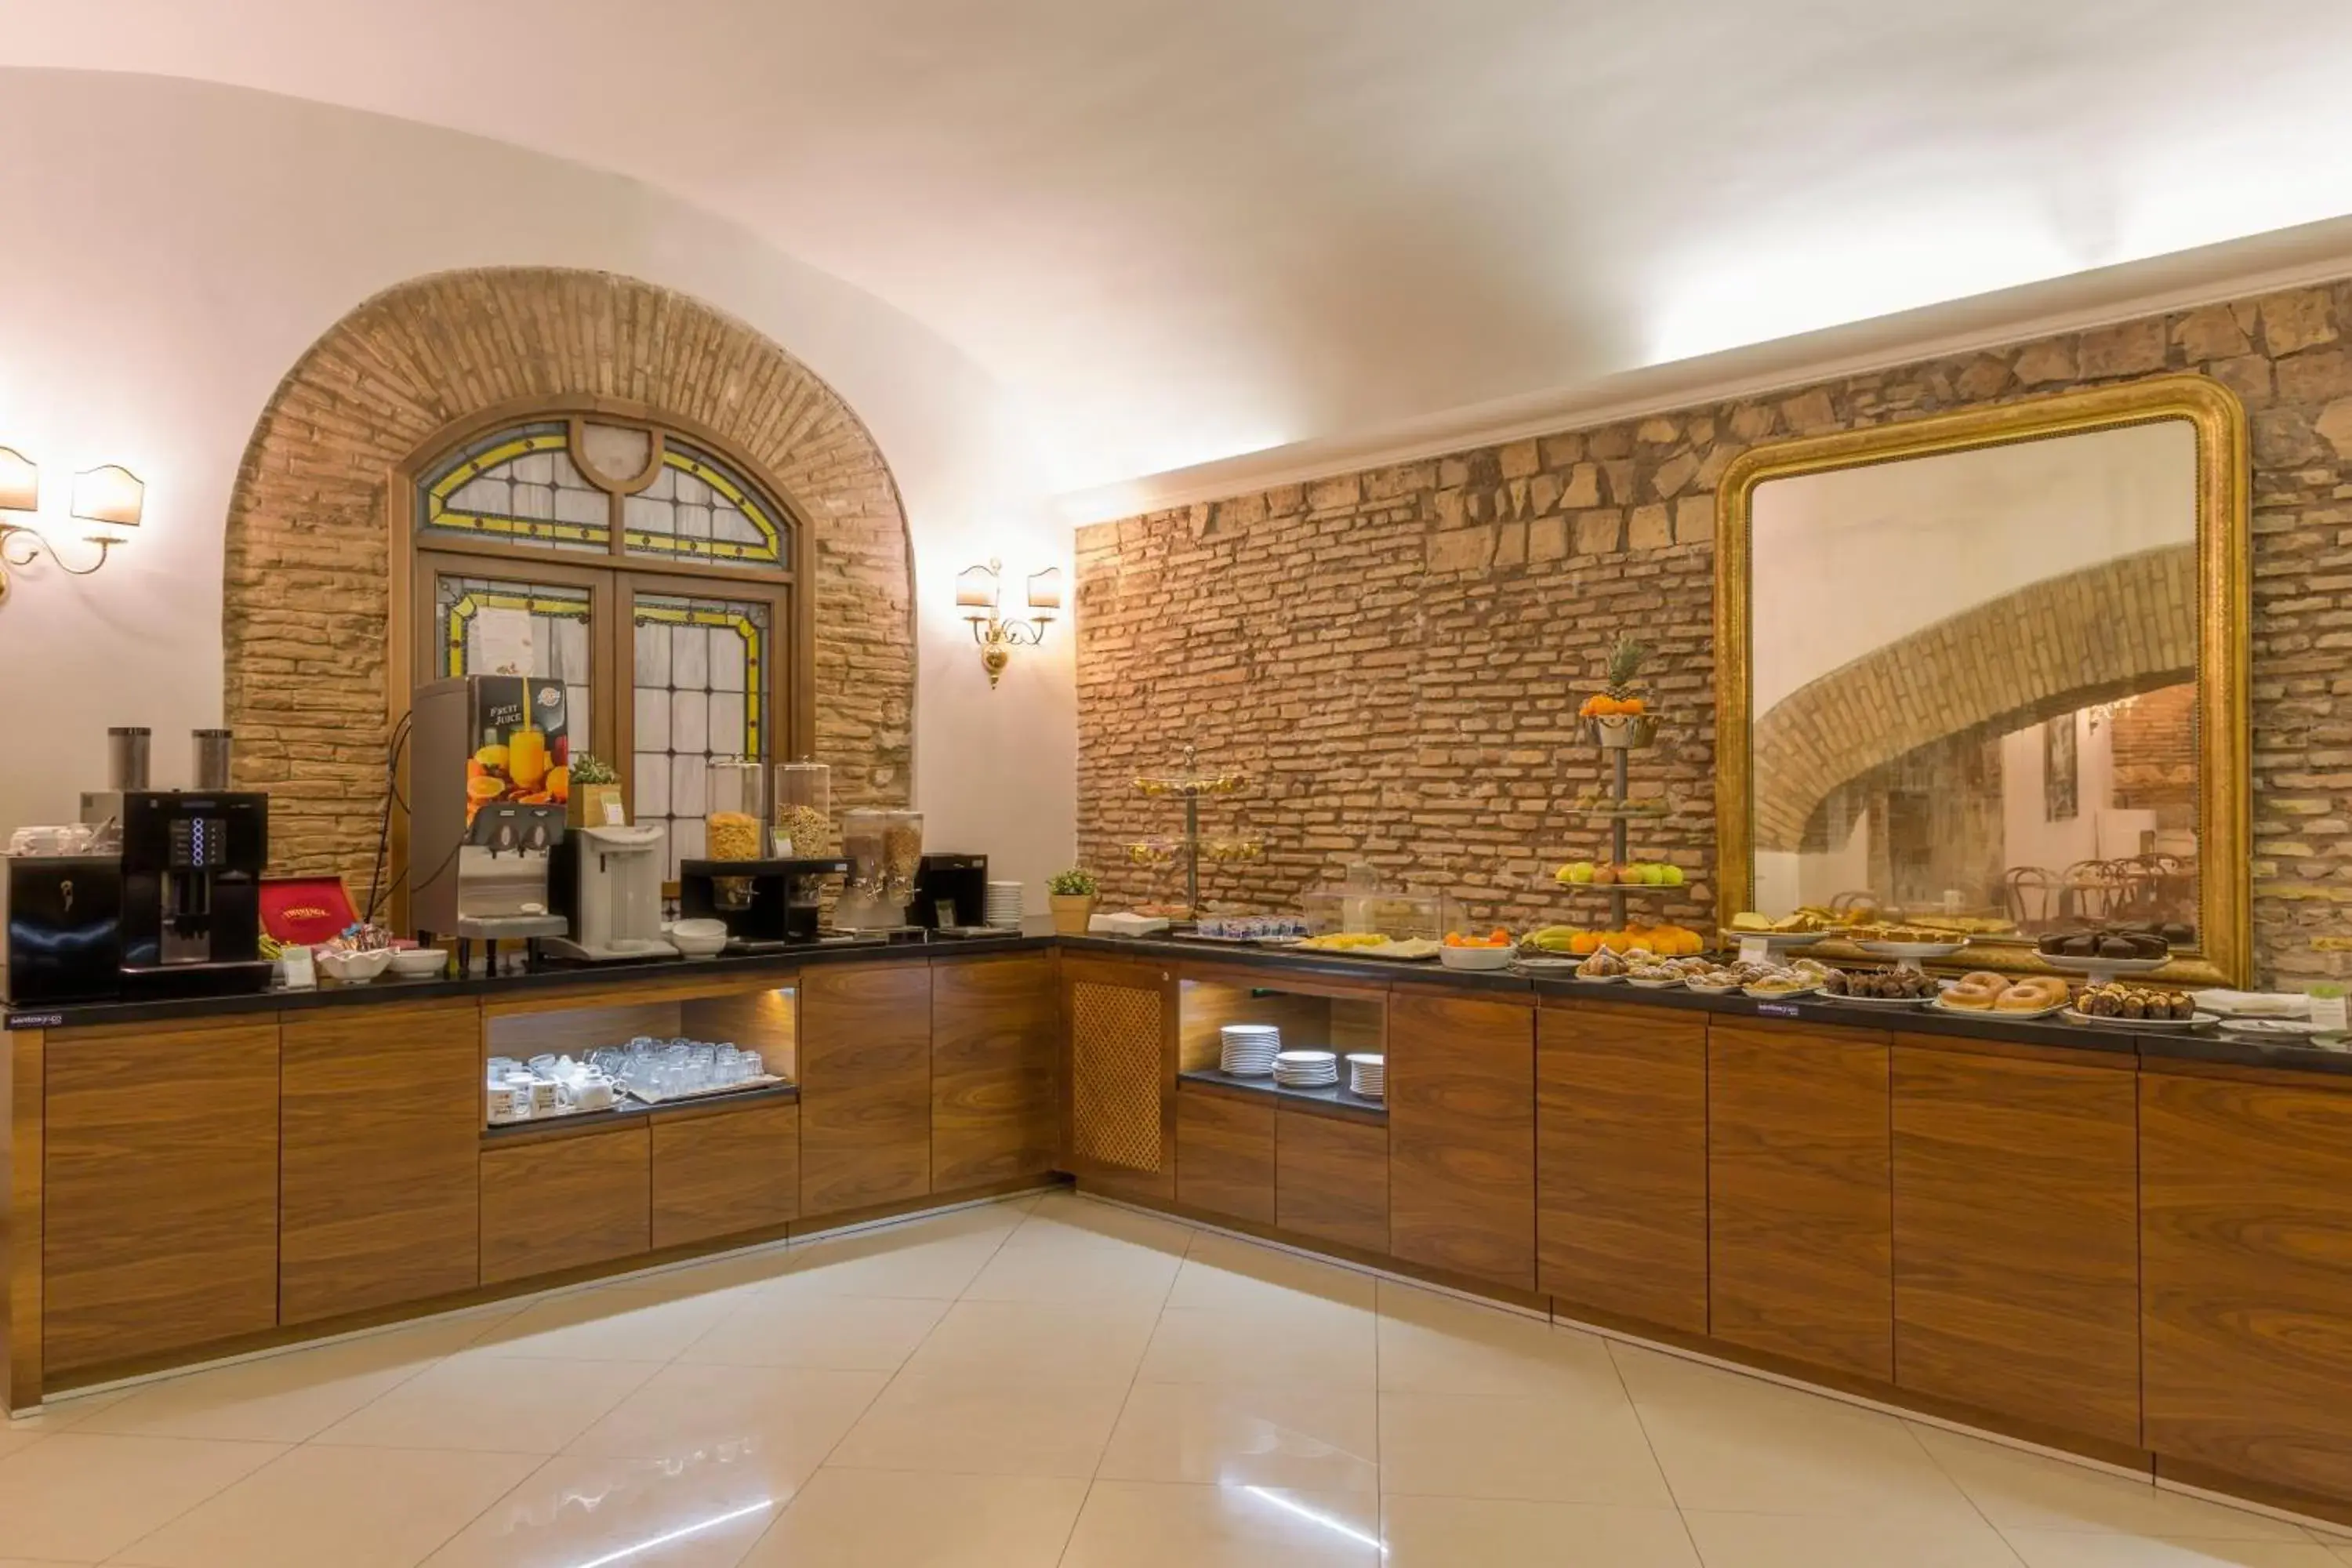 Buffet breakfast in Hotel Della Torre Argentina